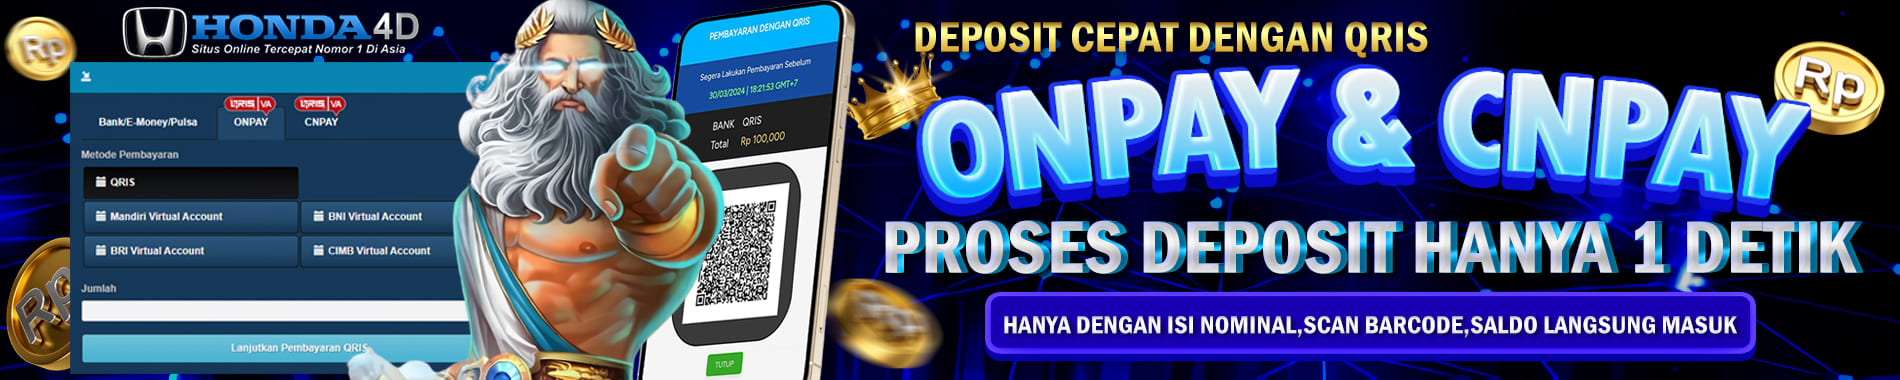 honda4d deposit cepat dengan onpay dan cnpay